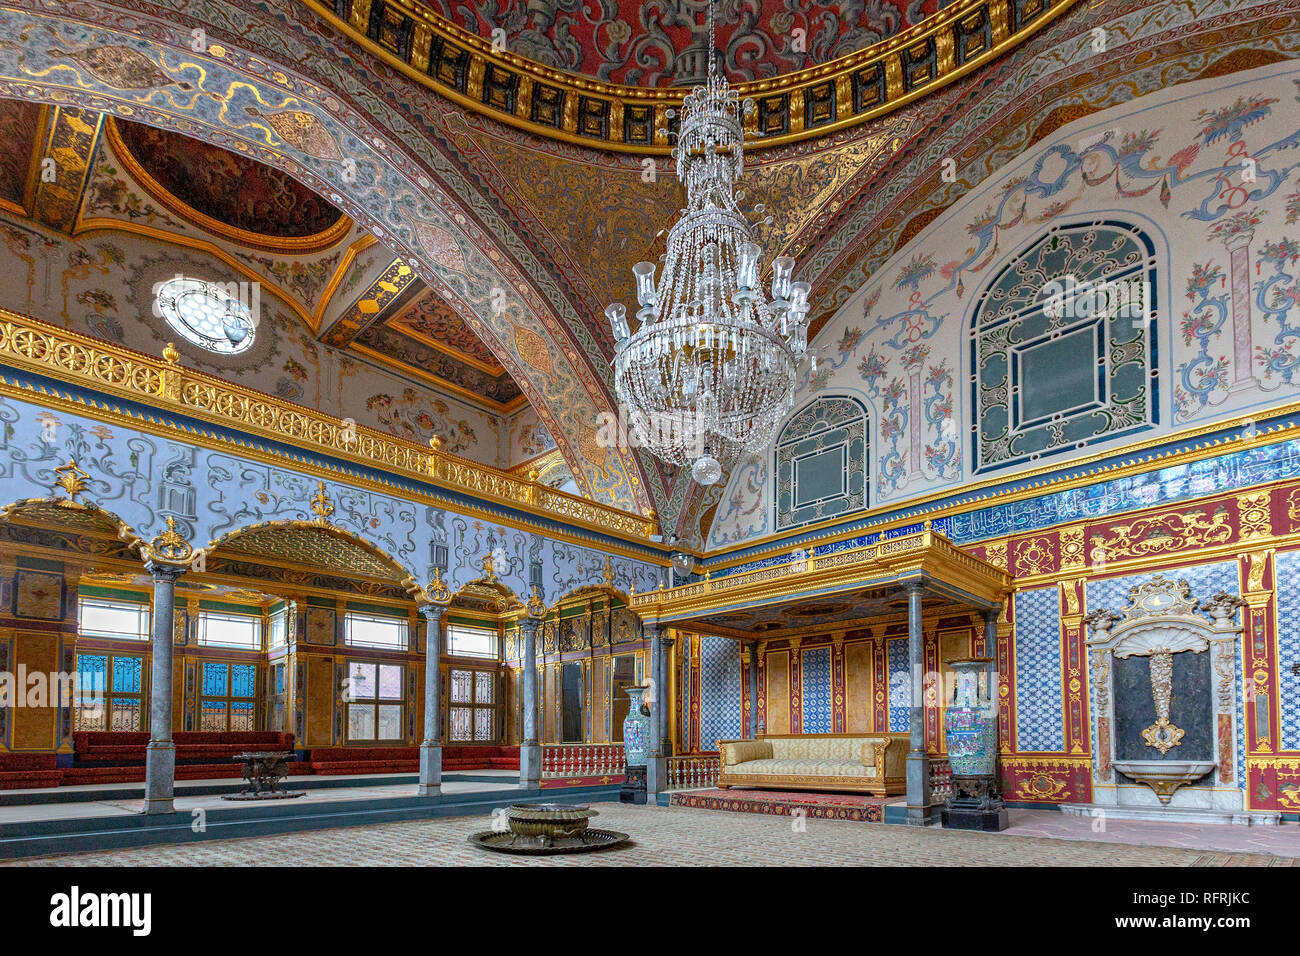 Im Harem des Topkapi Palast in Istanbul, Türkei Stockfoto